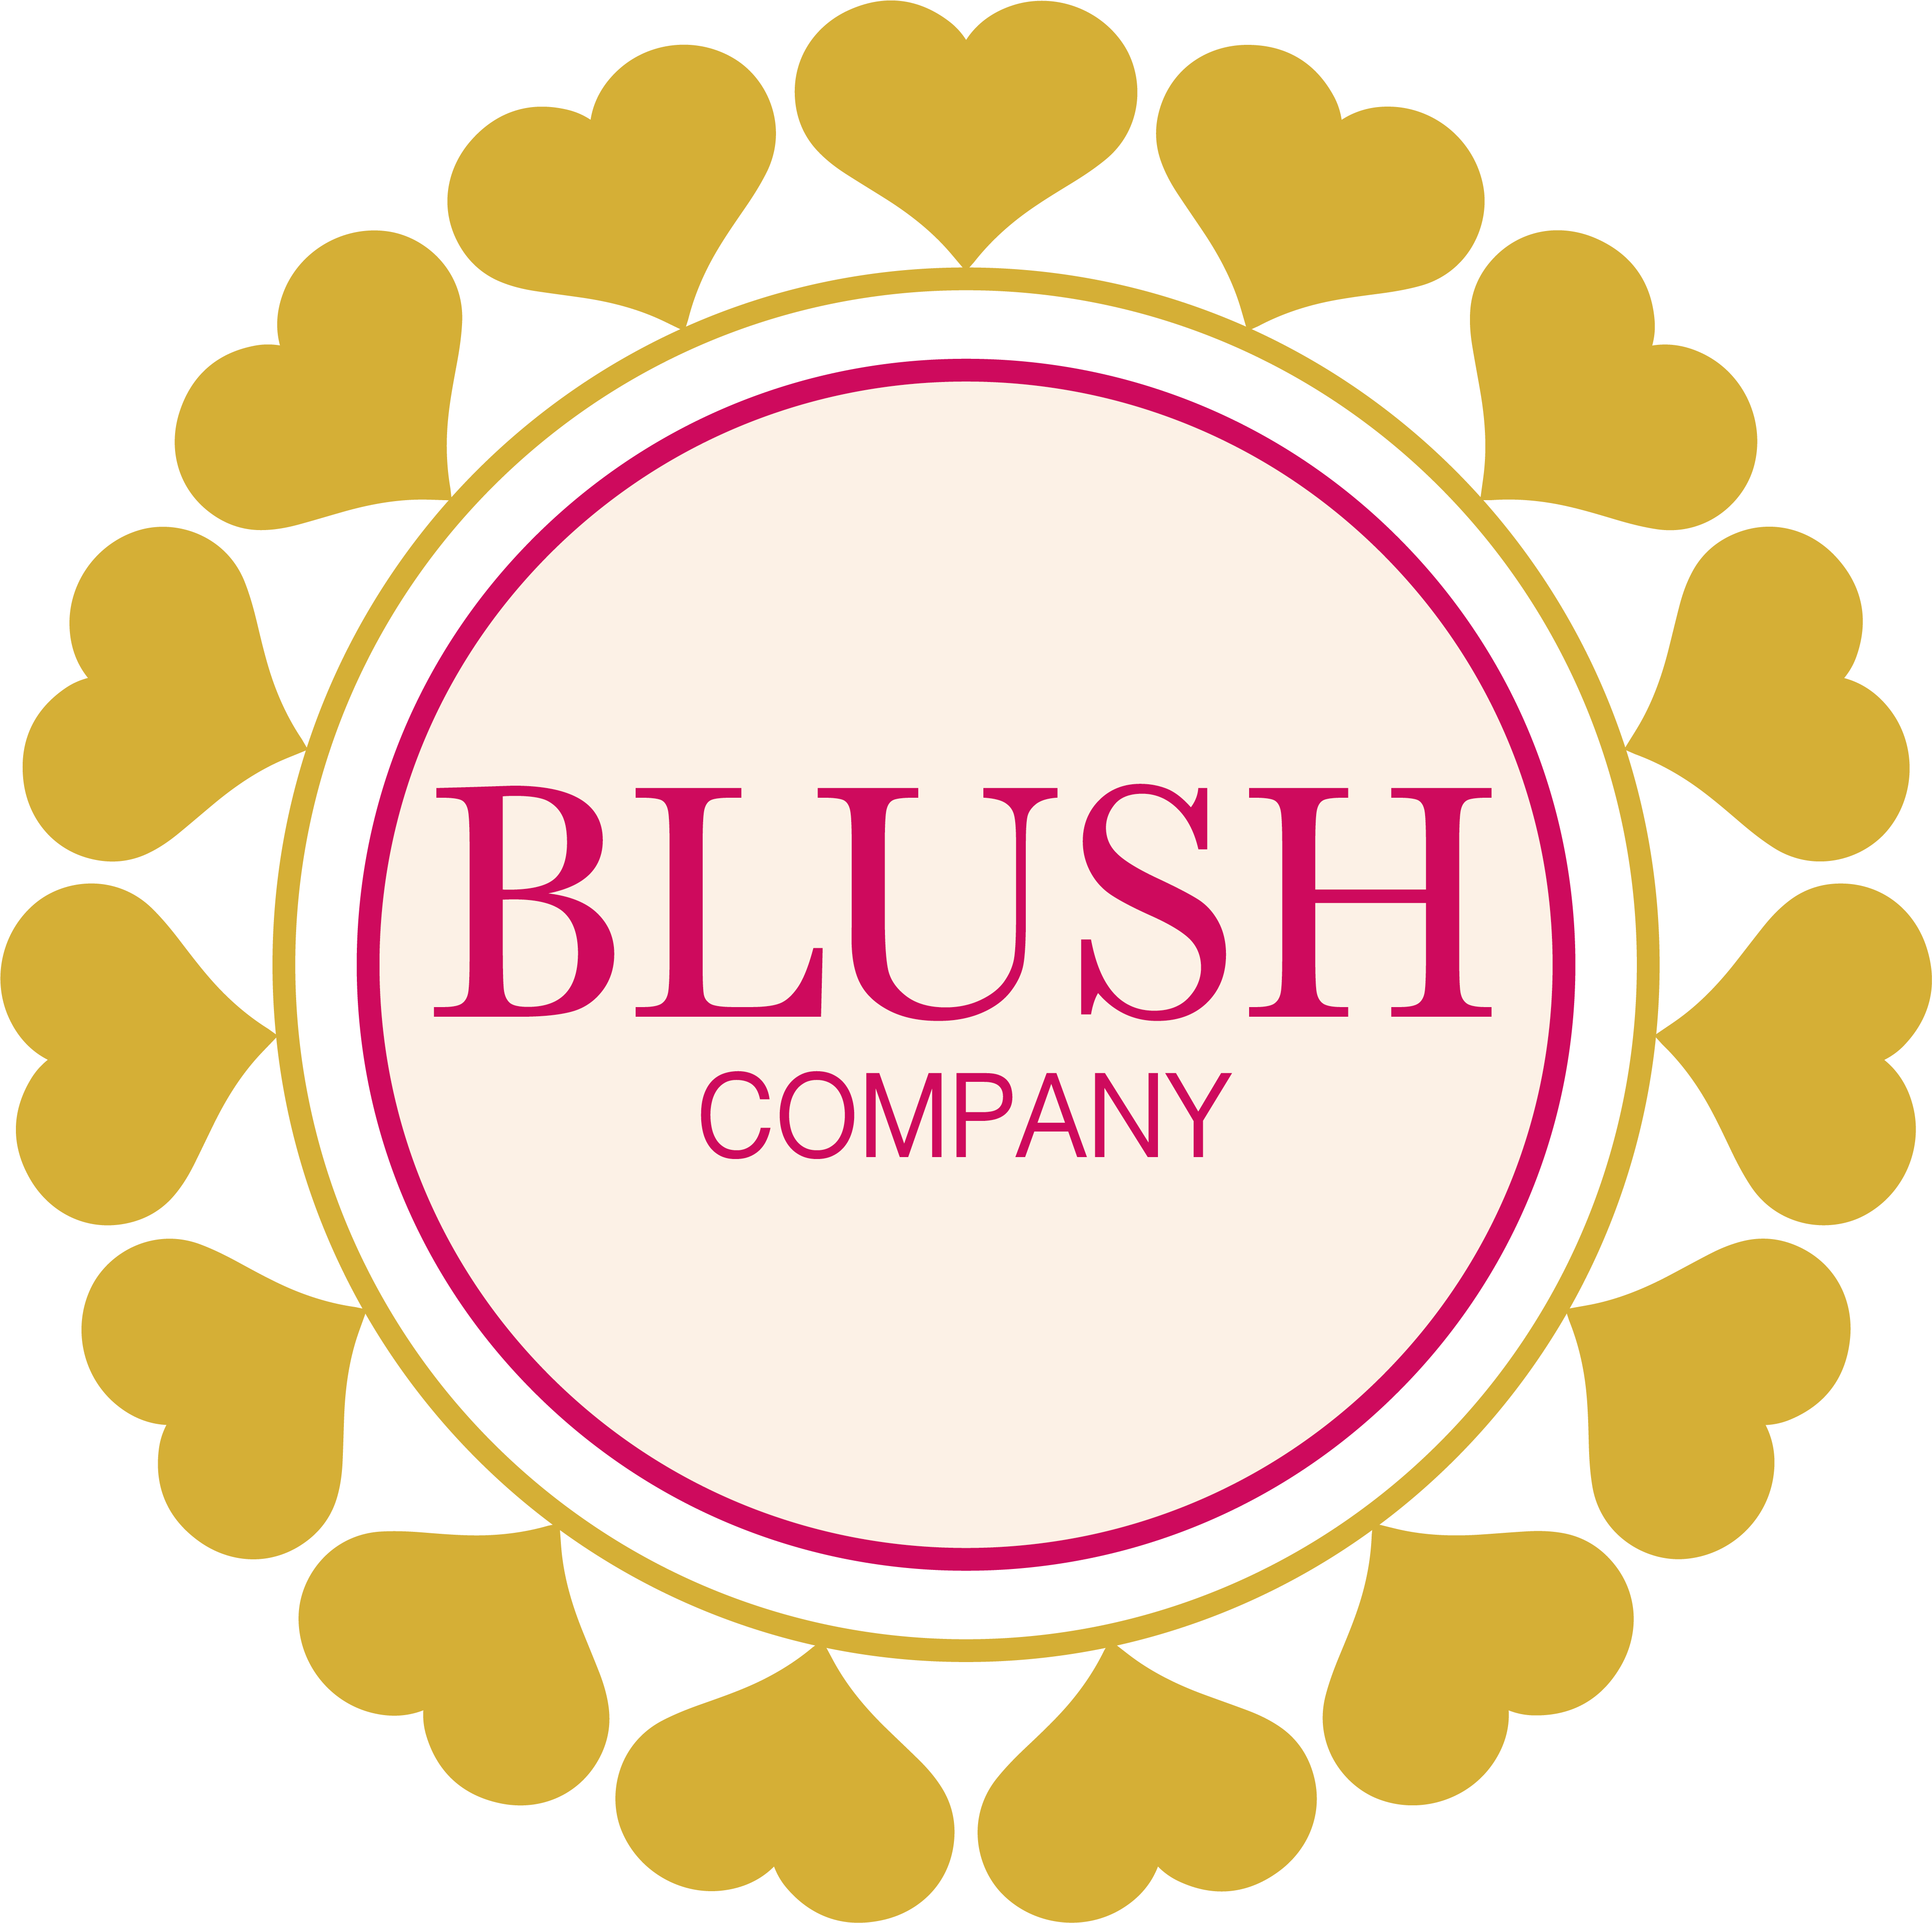 Blush Company logo